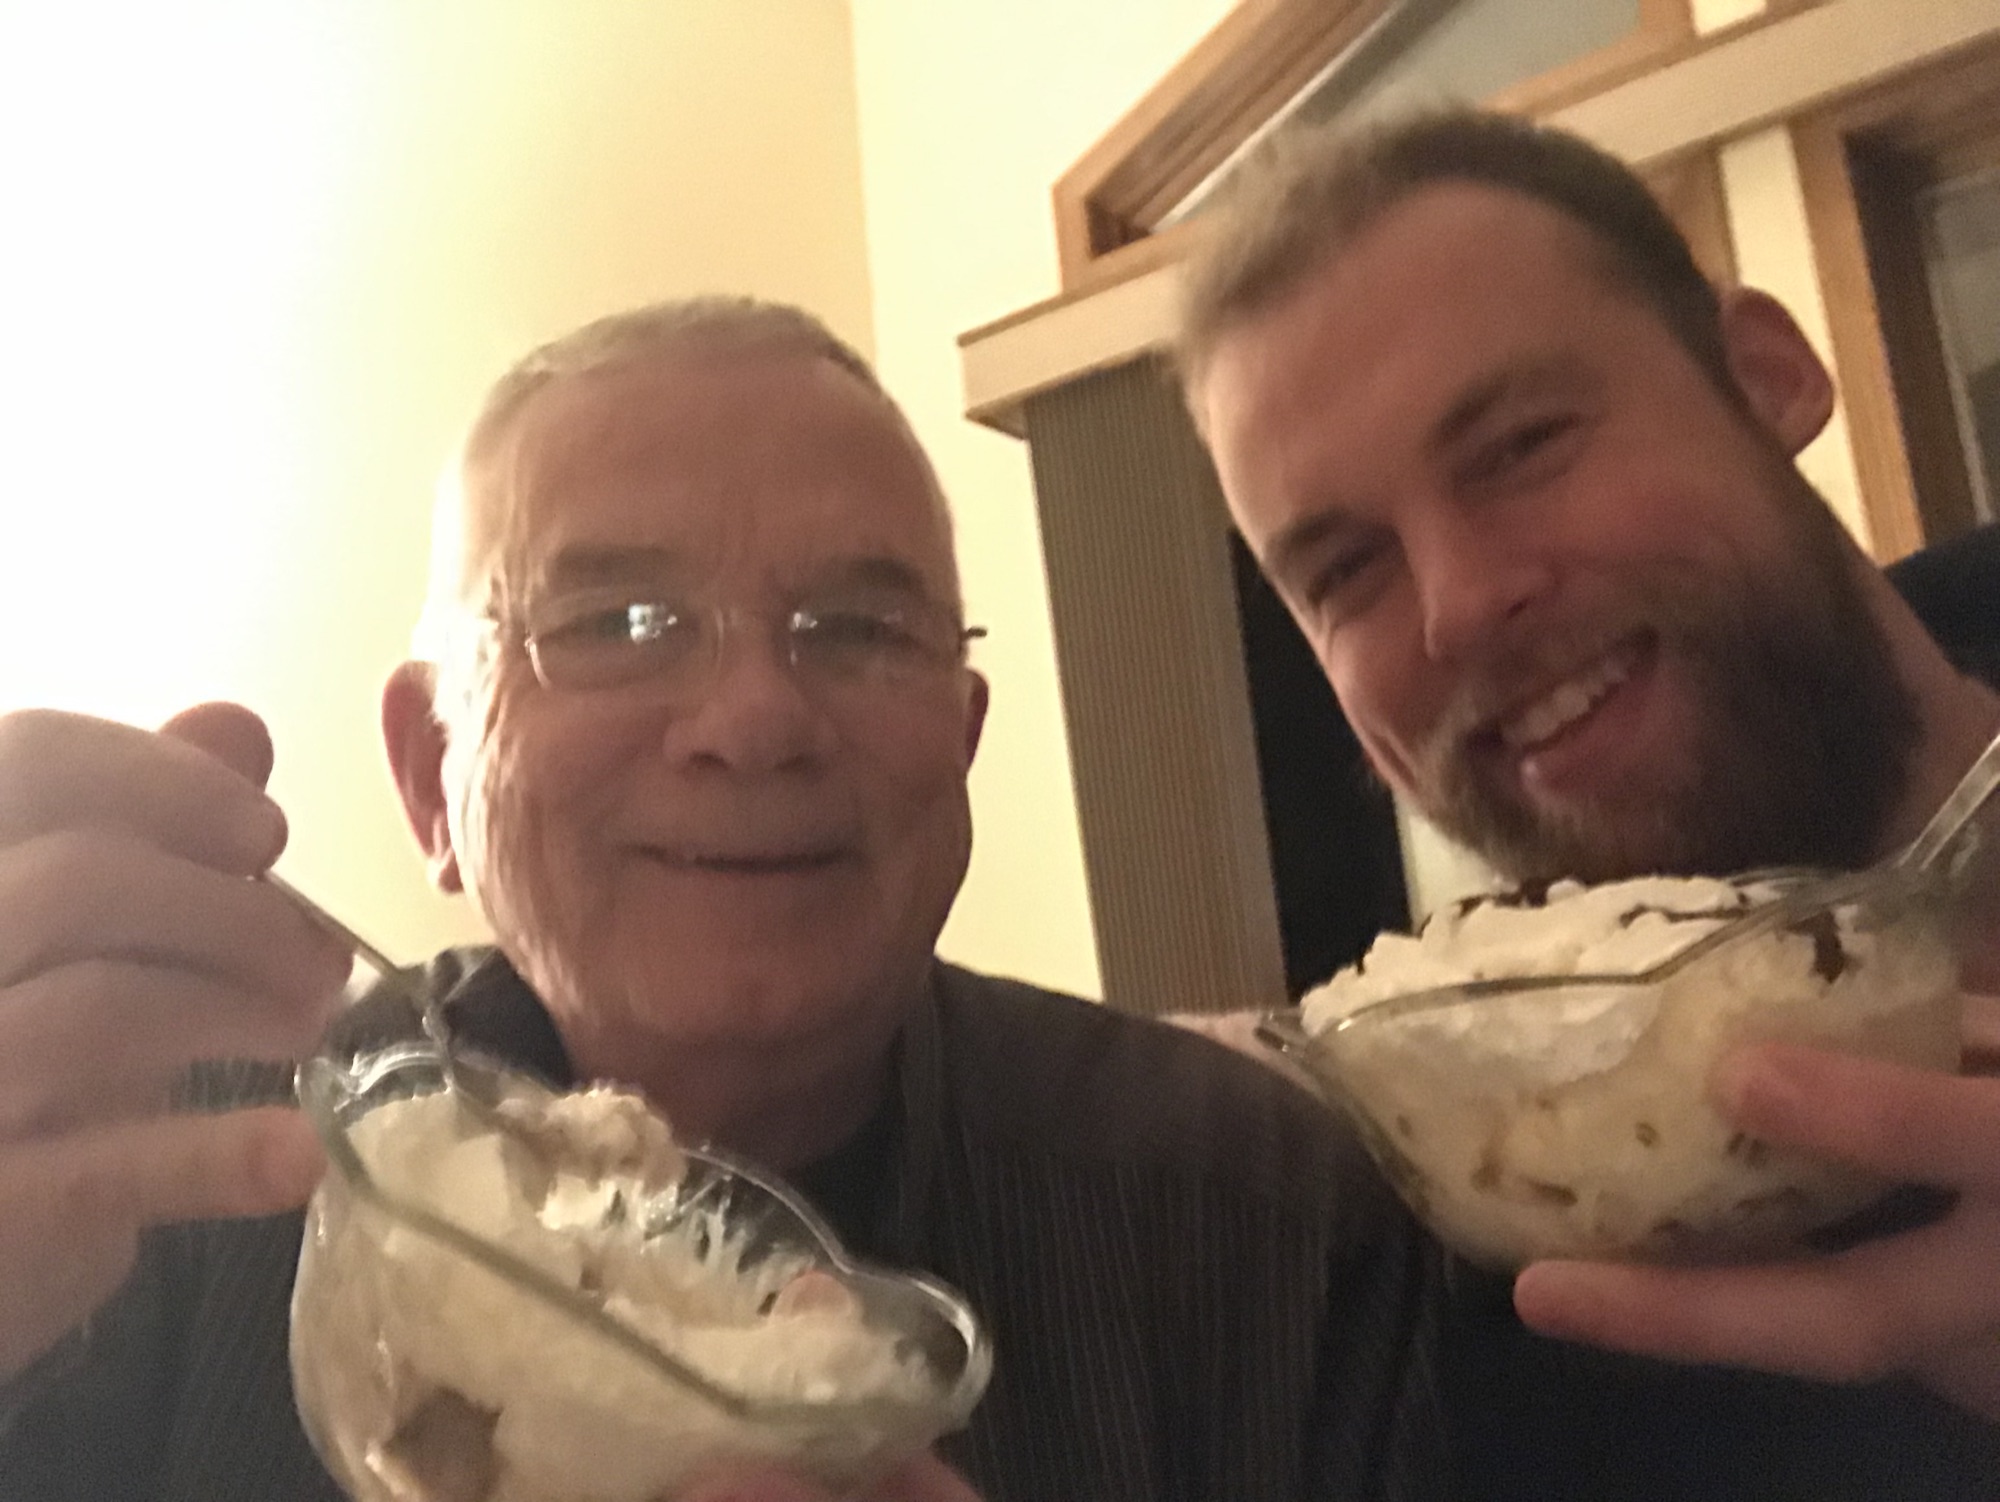 Grandpa and I both like ice cream a lot